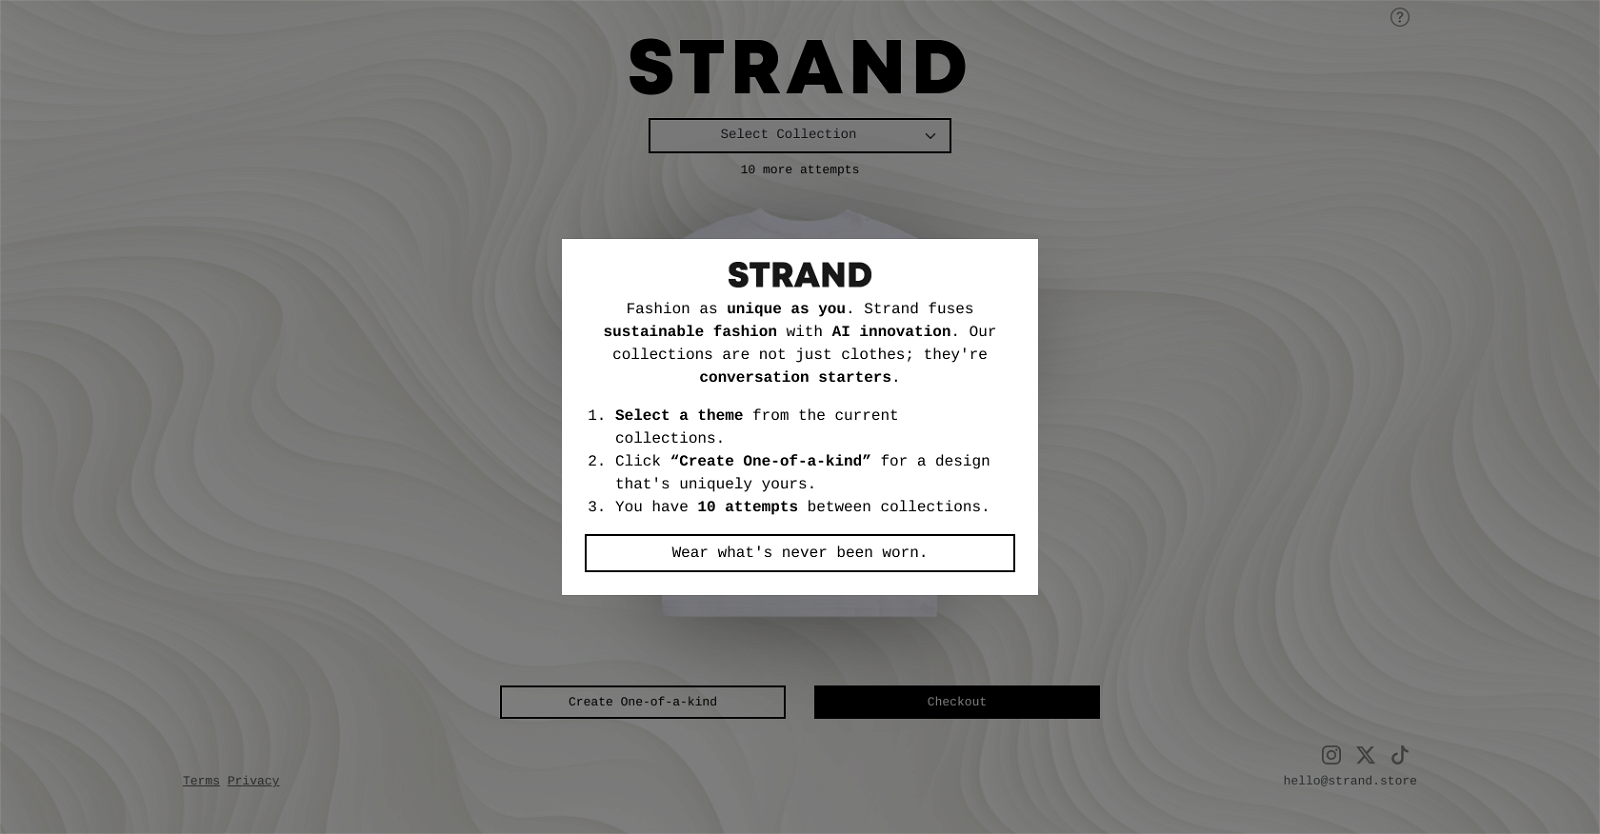 Strand Store website